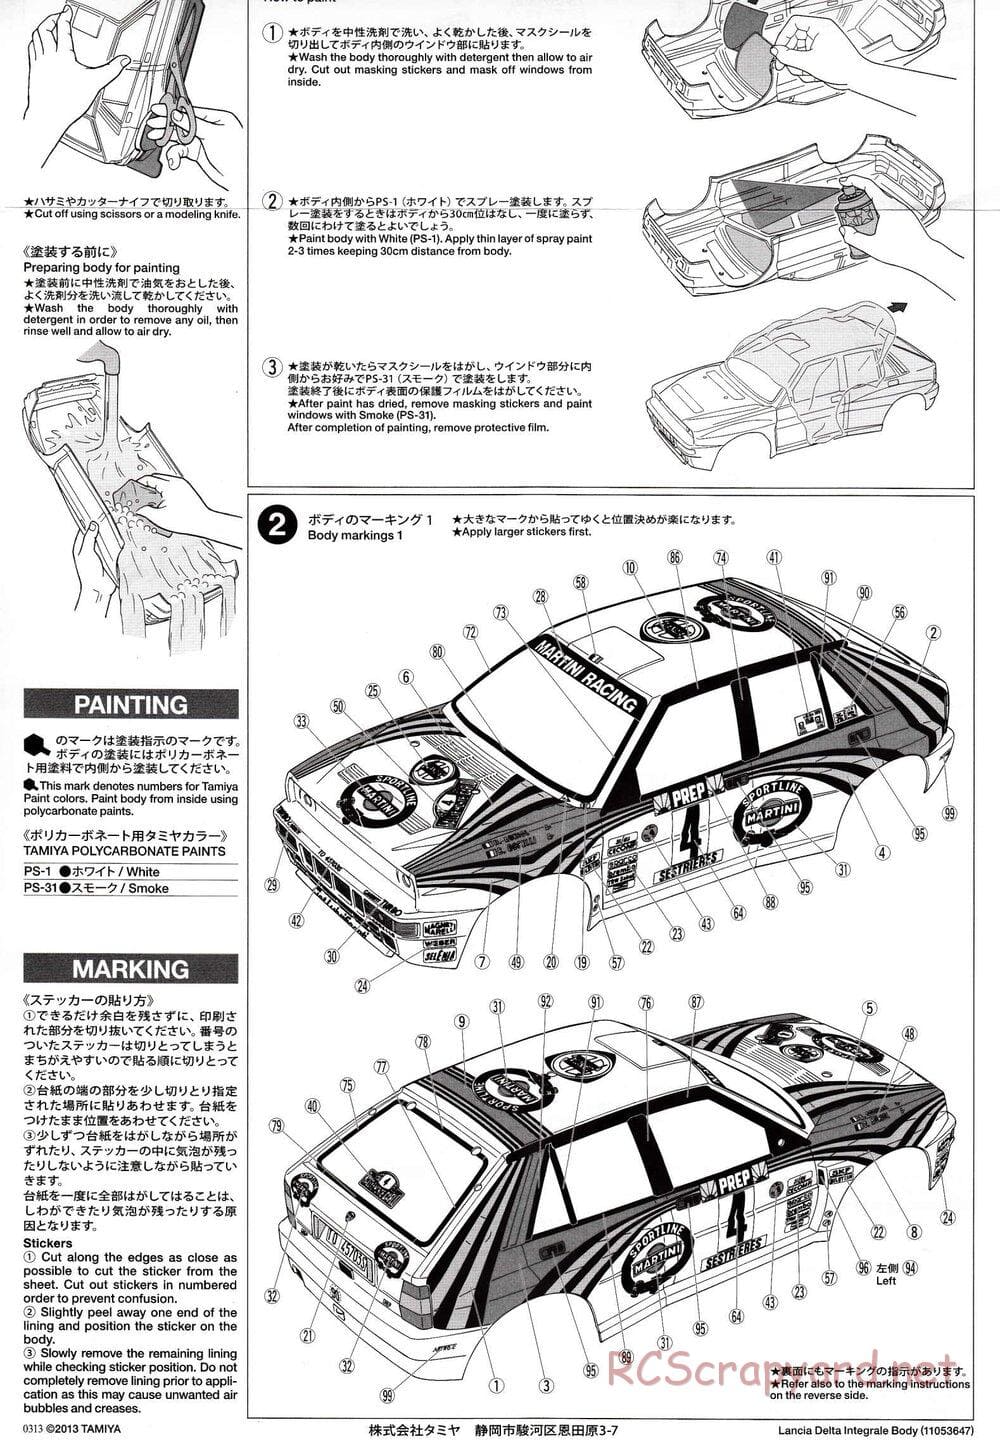 Tamiya - Lancia Delta Integrale - TT-02 Chassis - Body Manual - Page 2